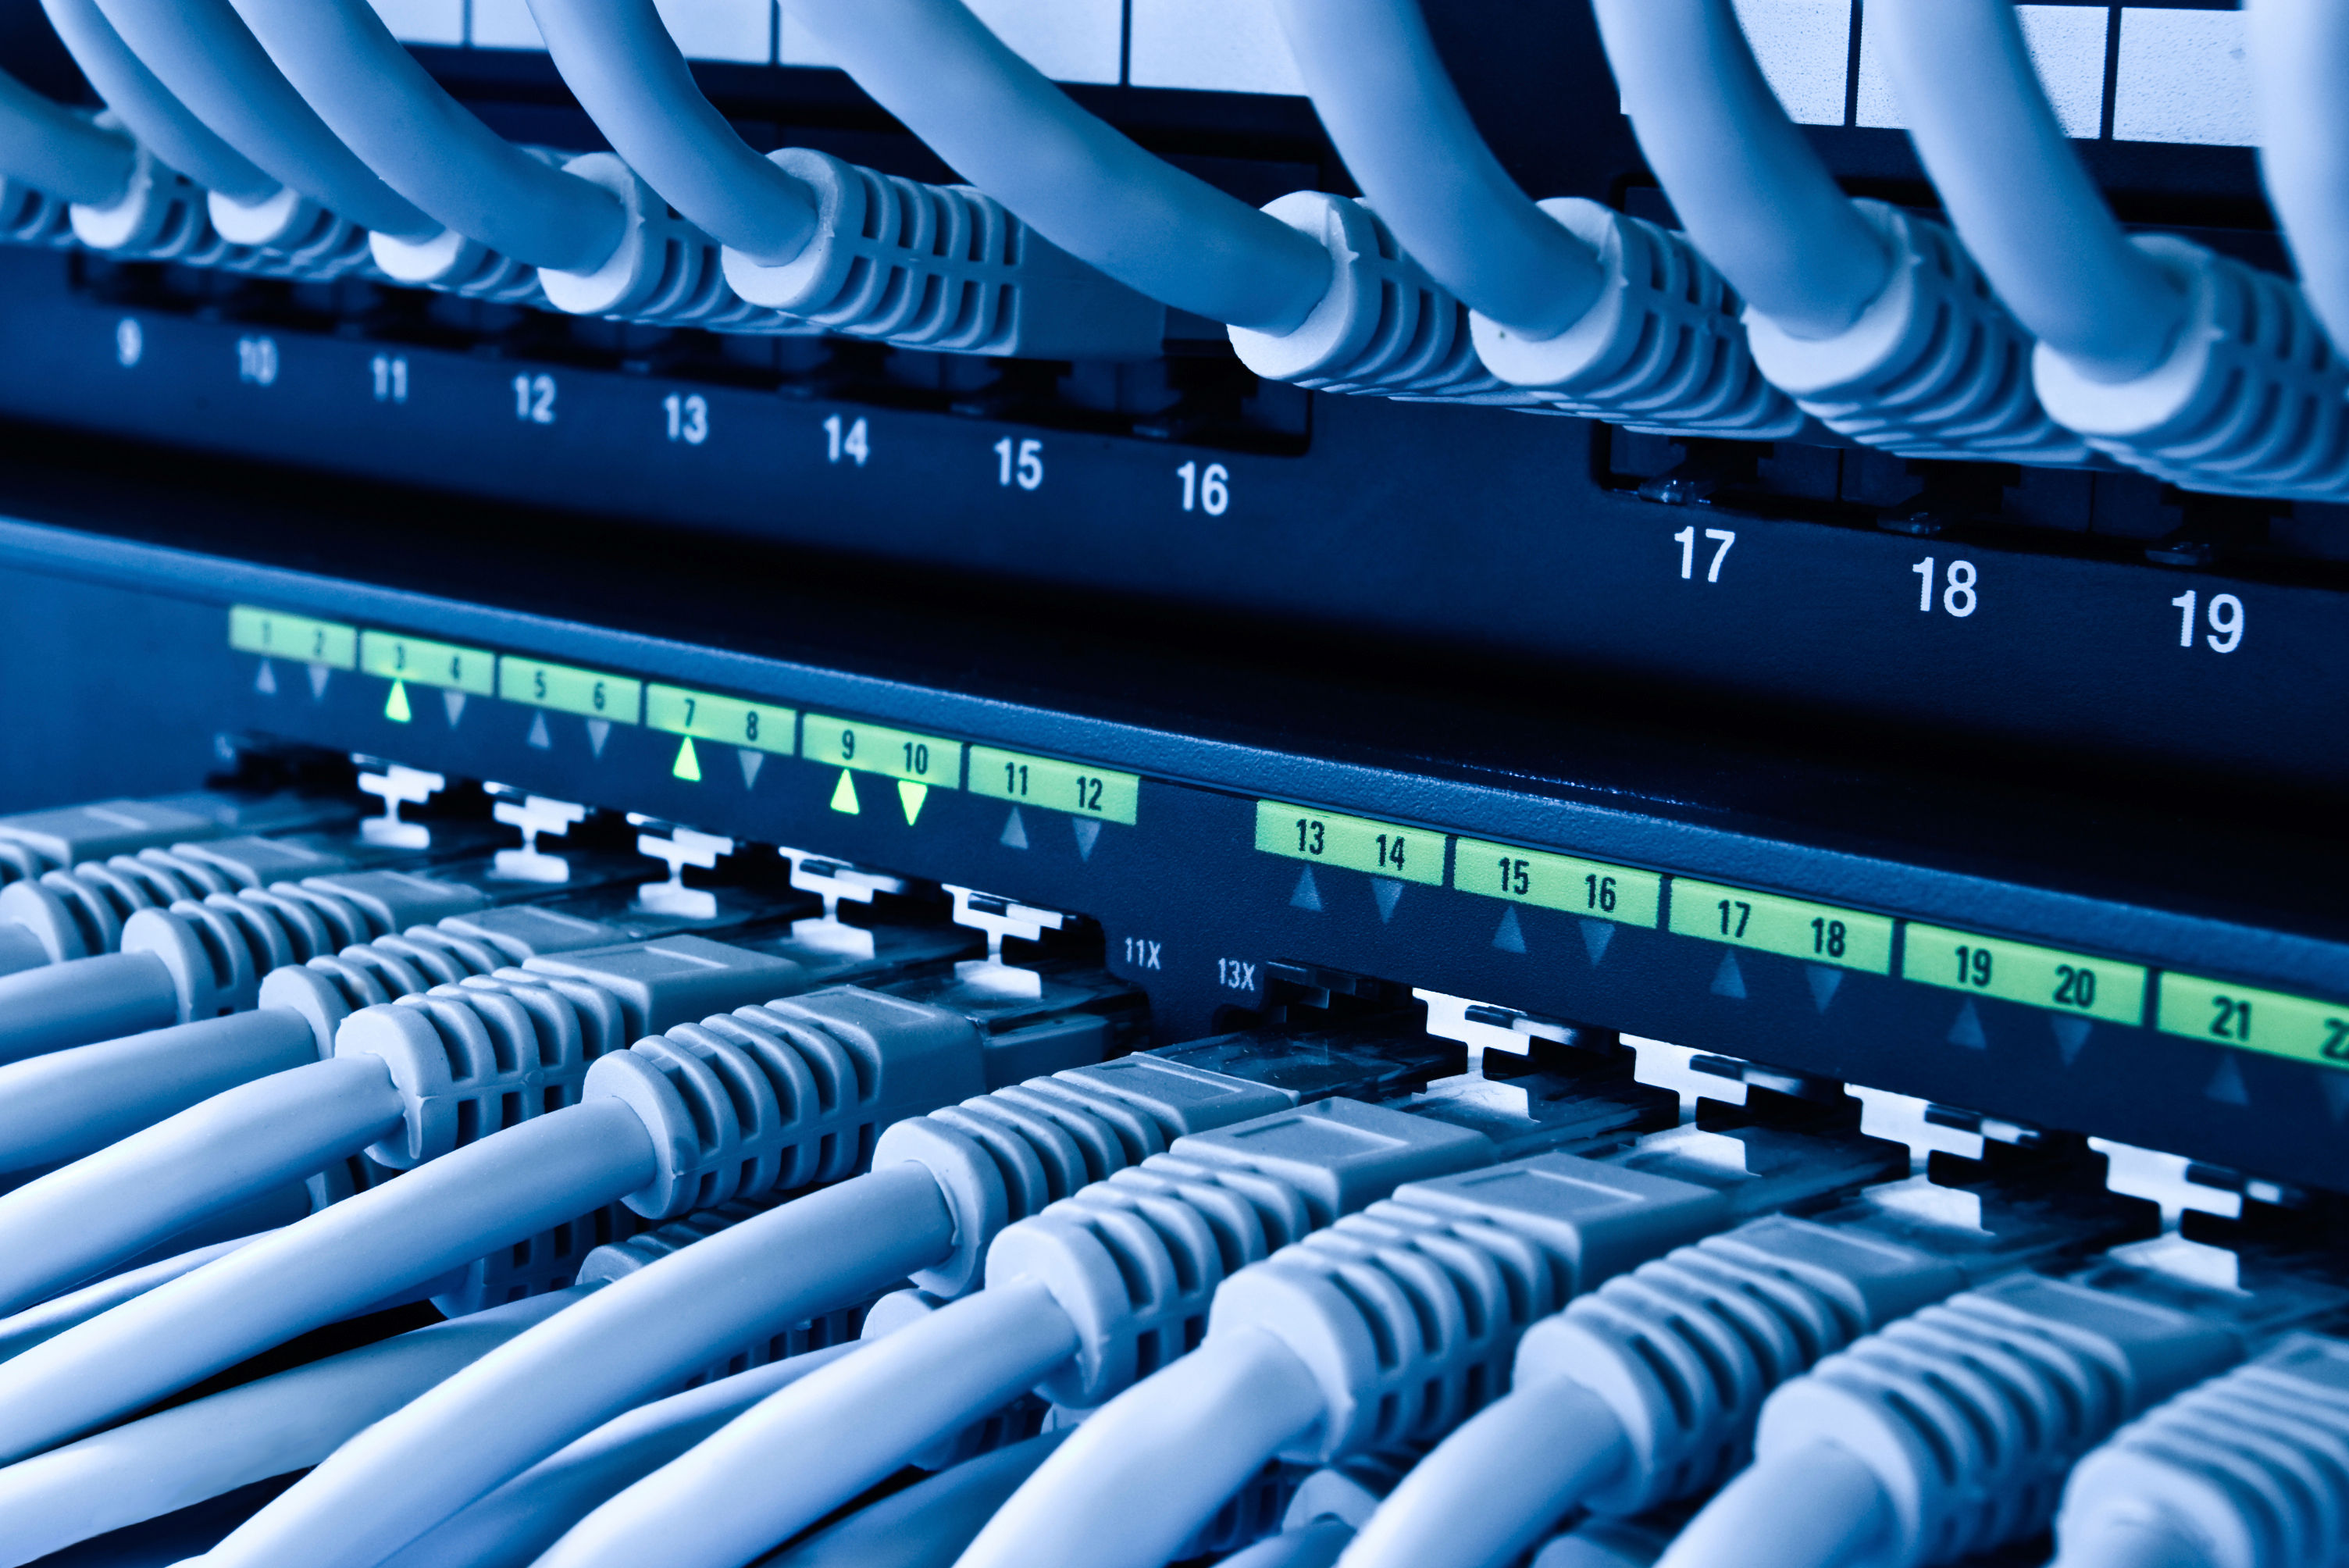 Networking Technologies | Michigan Broadband Systems